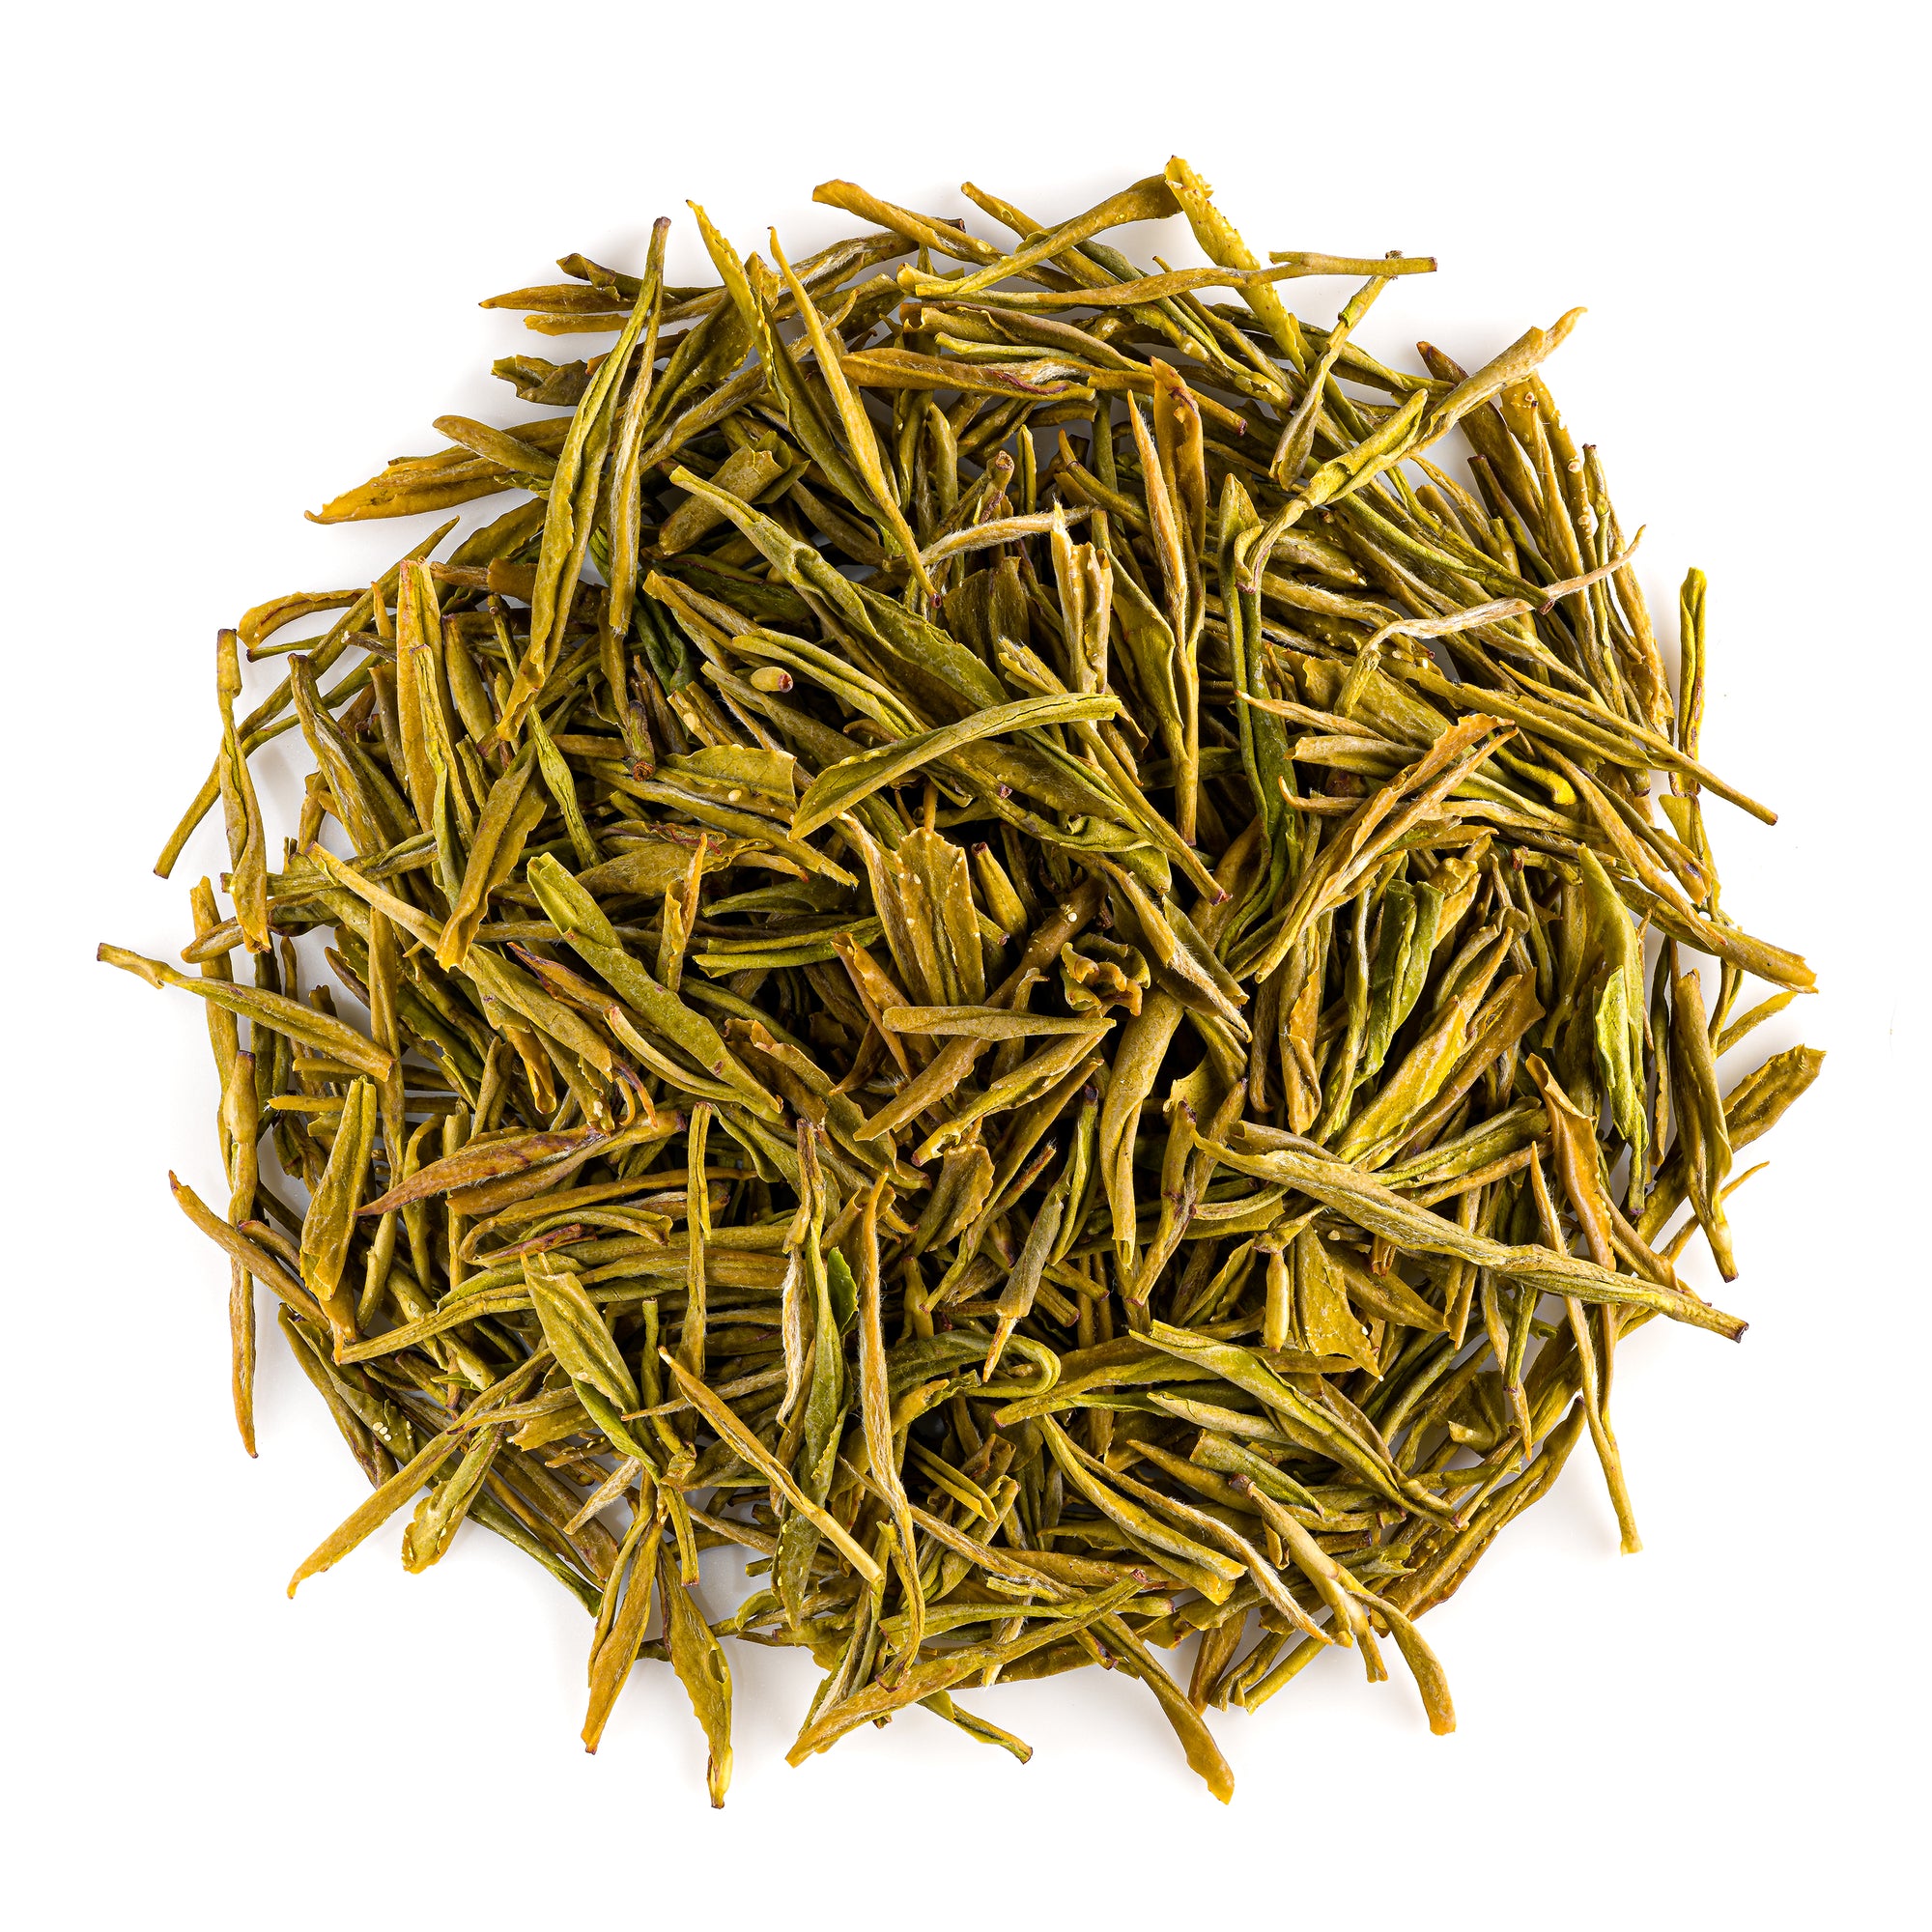 Tè giallo di Huoshan - Tè dolce con germogli di Huoshan Anhui